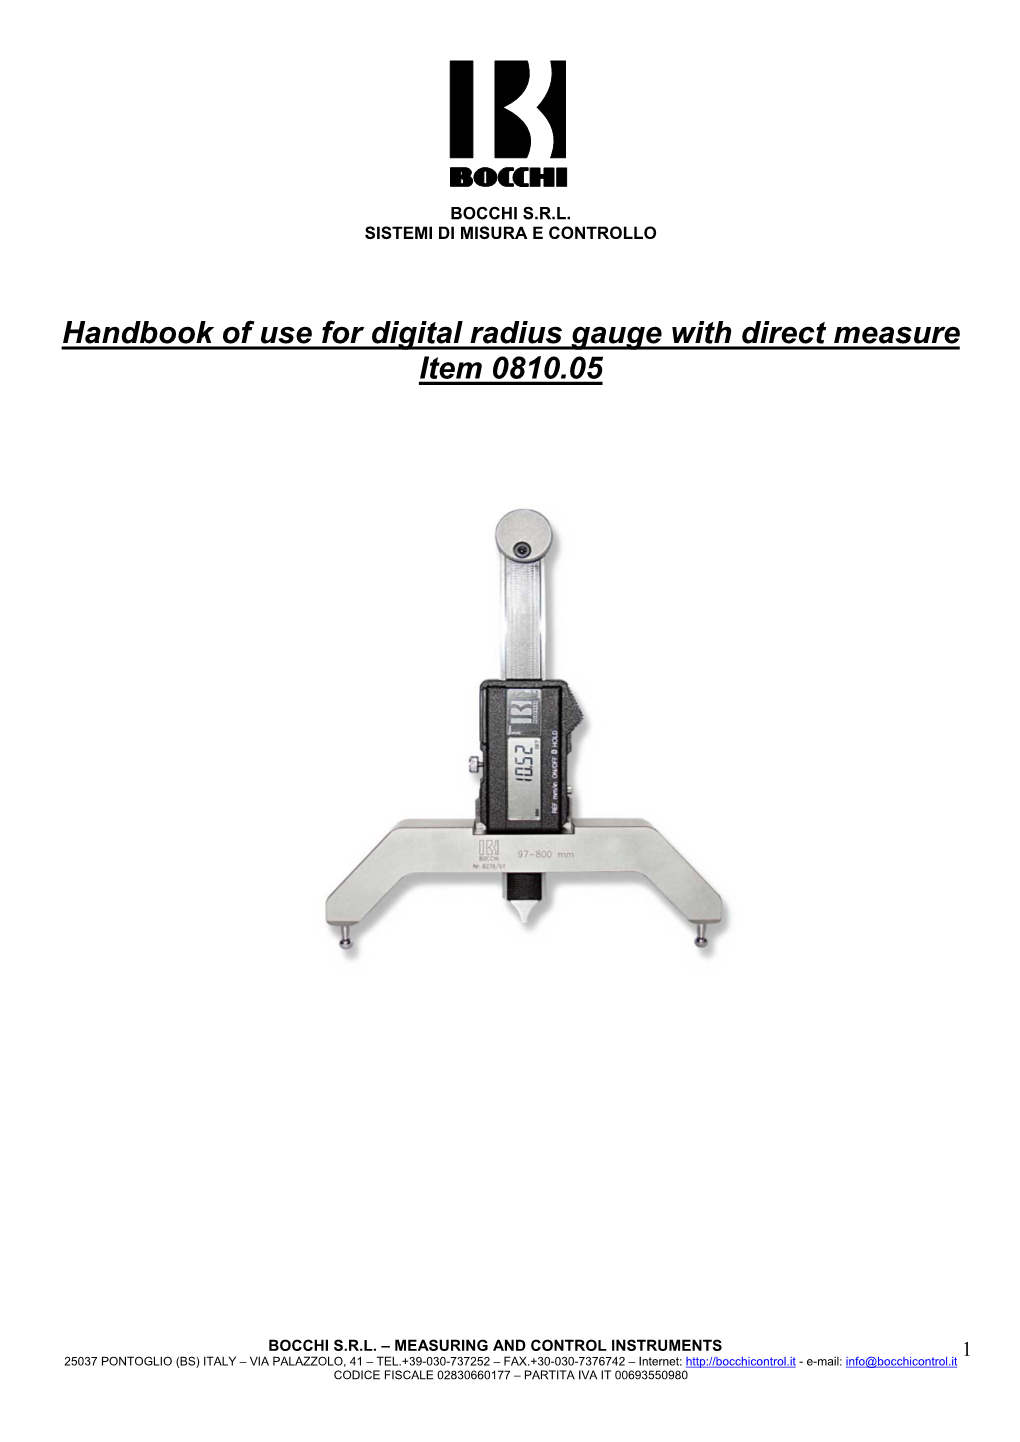 Handbook of Use for Digital Radius Gauge with Direct Measure Item 0810.05